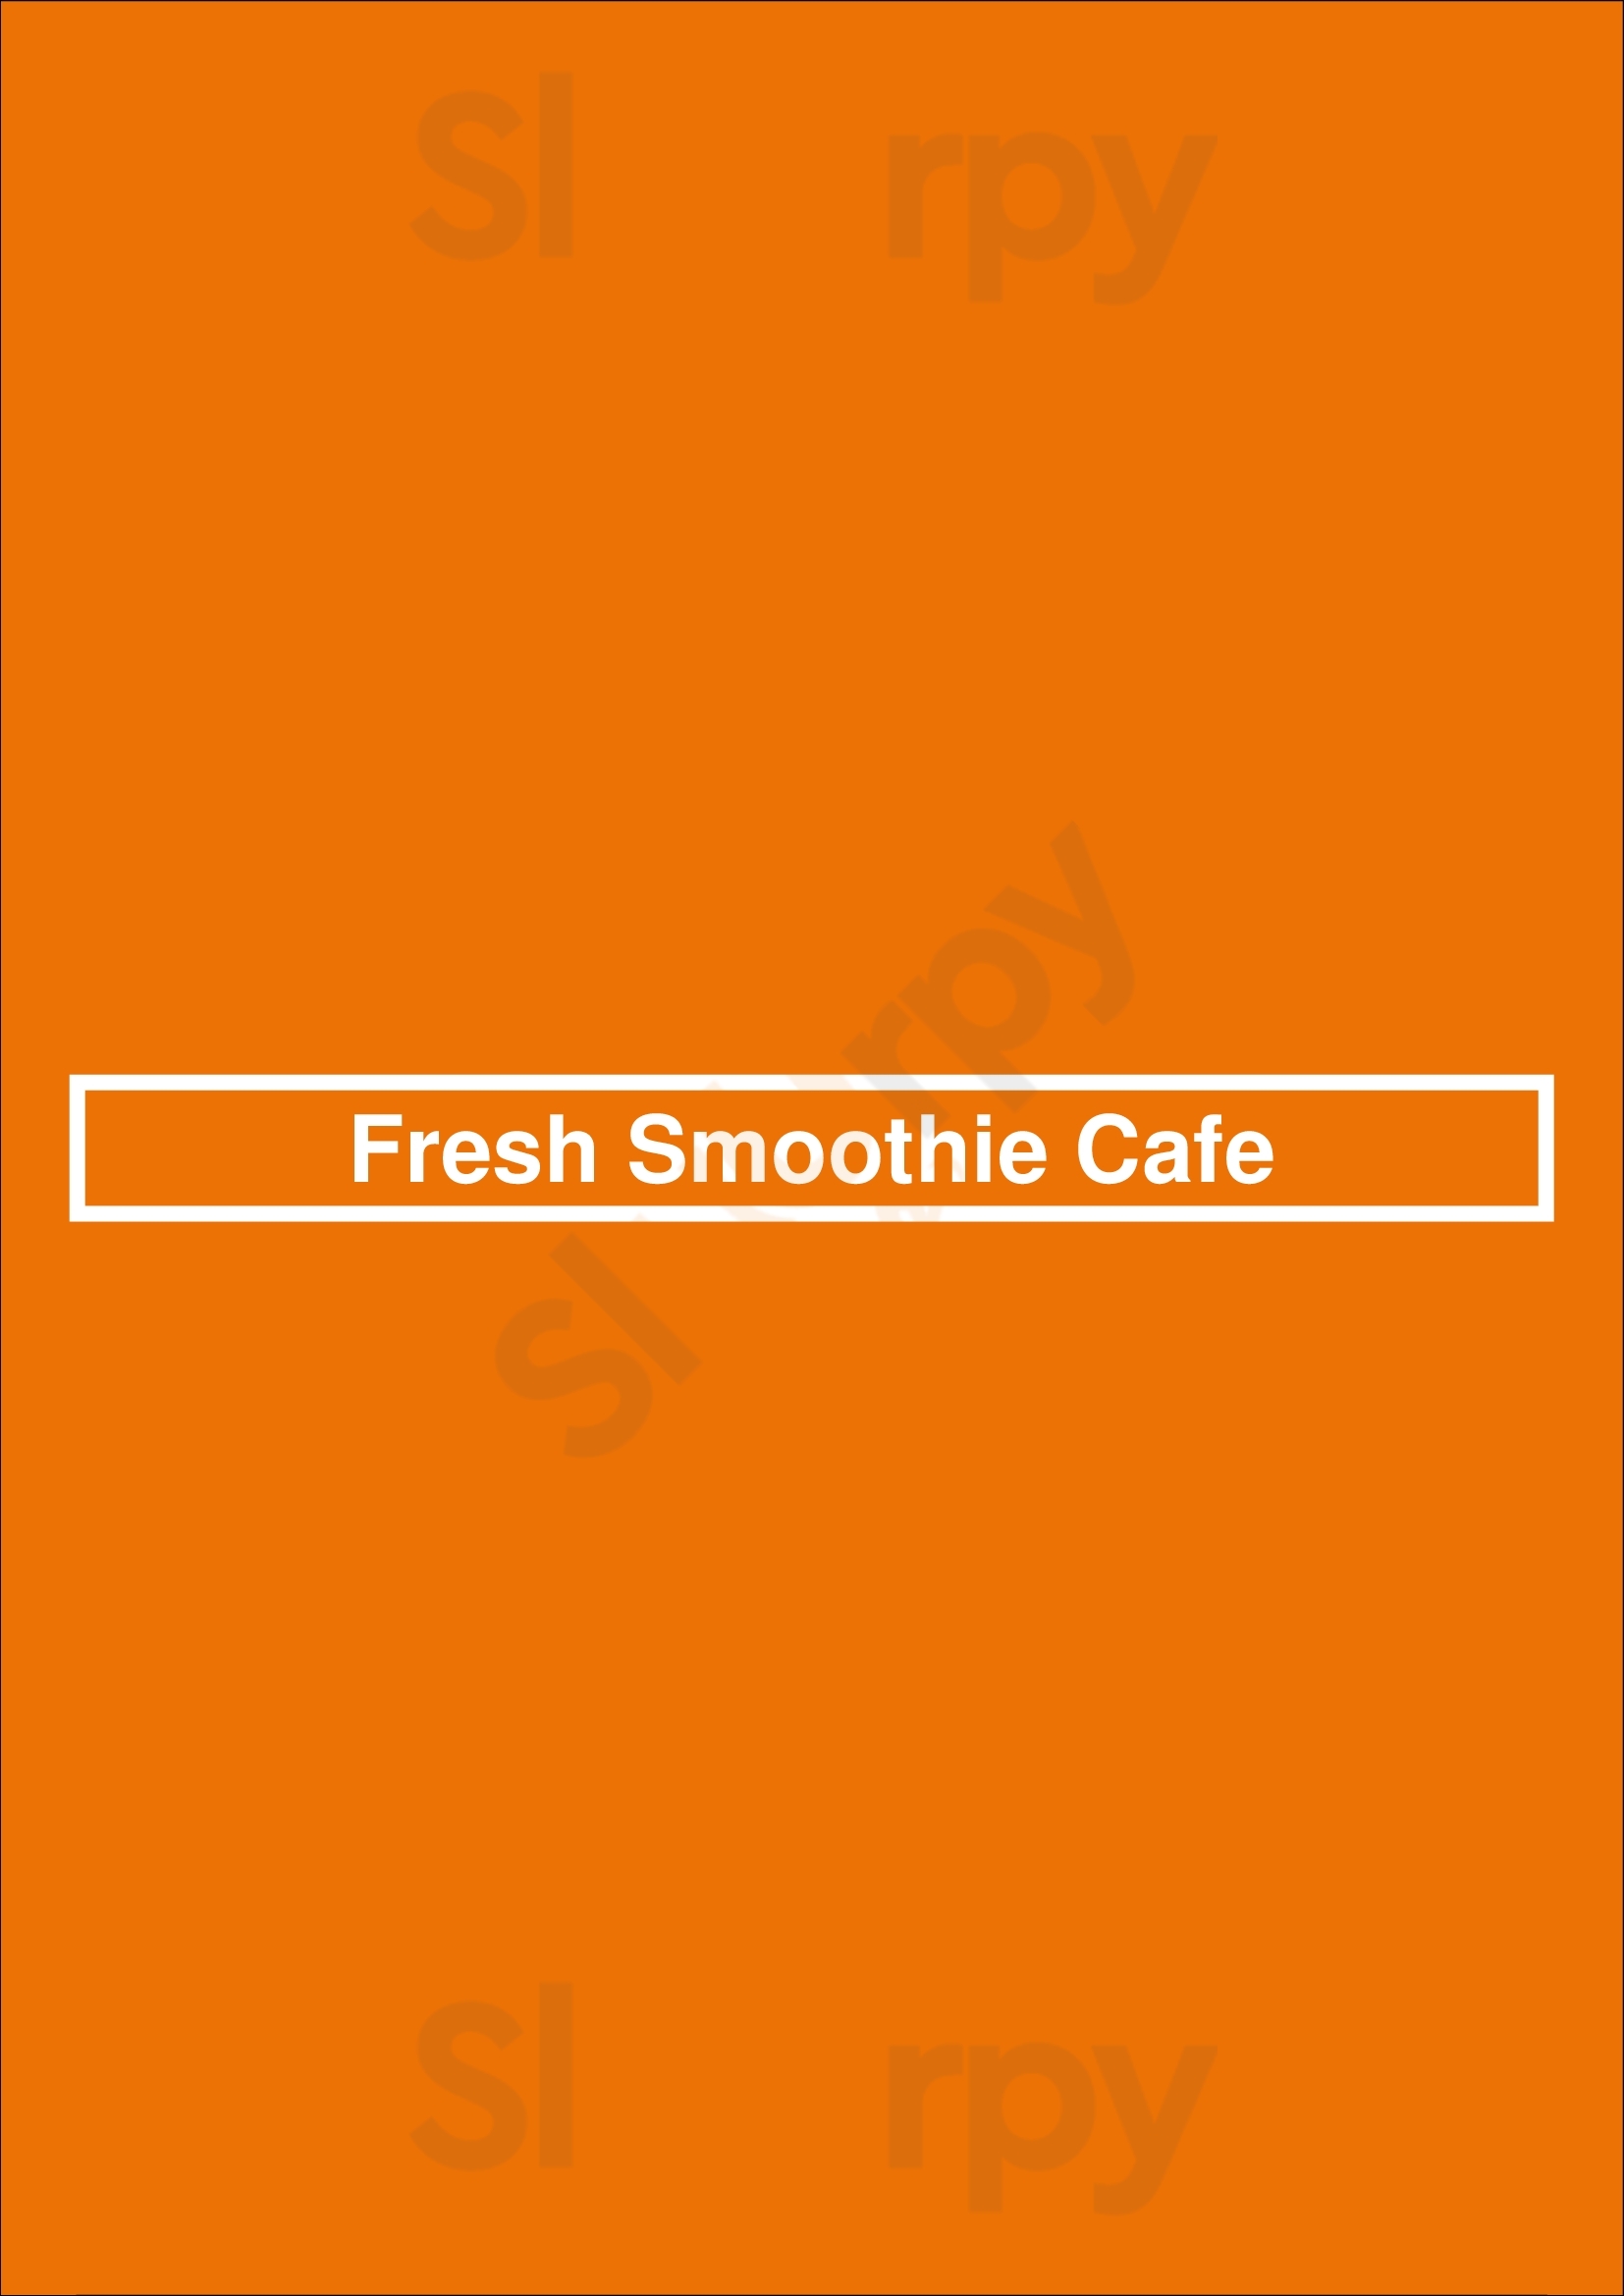 Fresh Smoothie Cafe Jonesboro Menu - 1